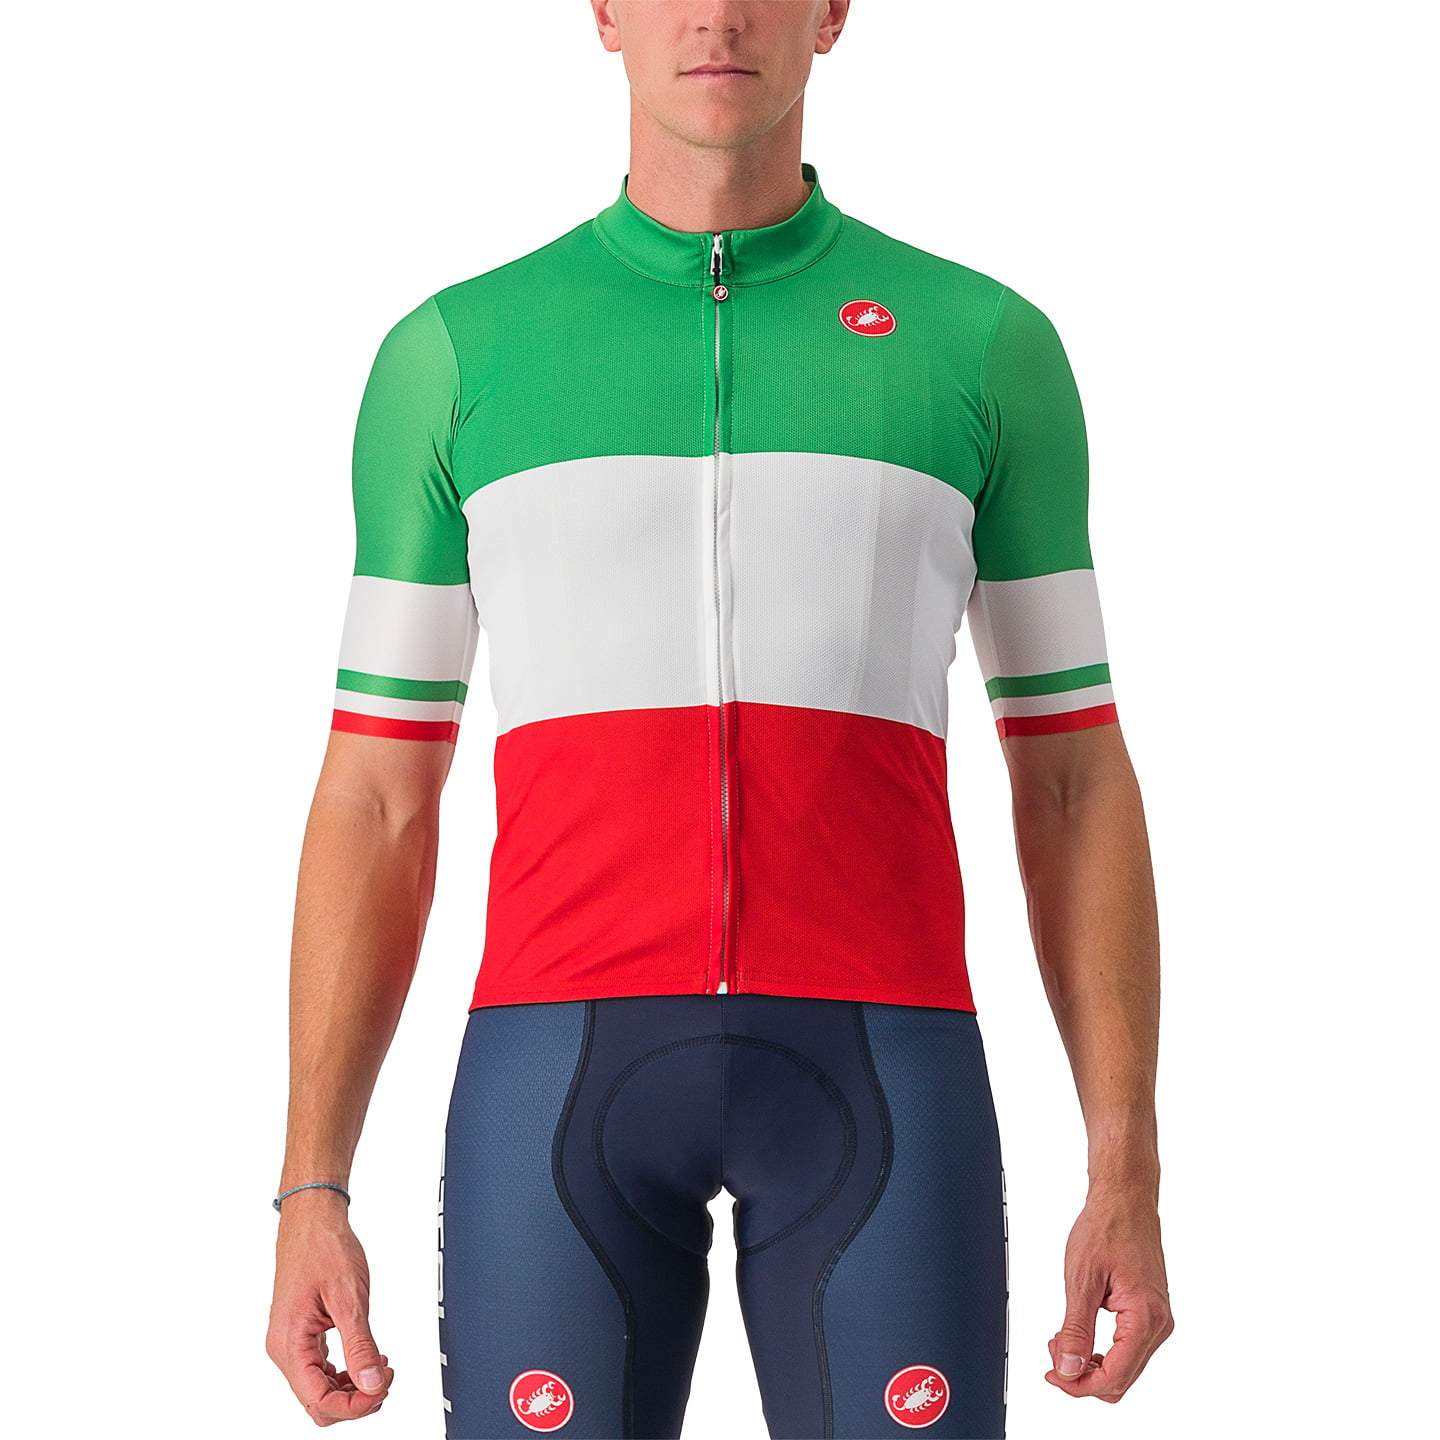 ITALIAN NATIONAL TEAM Trikolore 2024 Short Sleeve Jersey, for men, size XL, Bike Jersey, Cycle gear